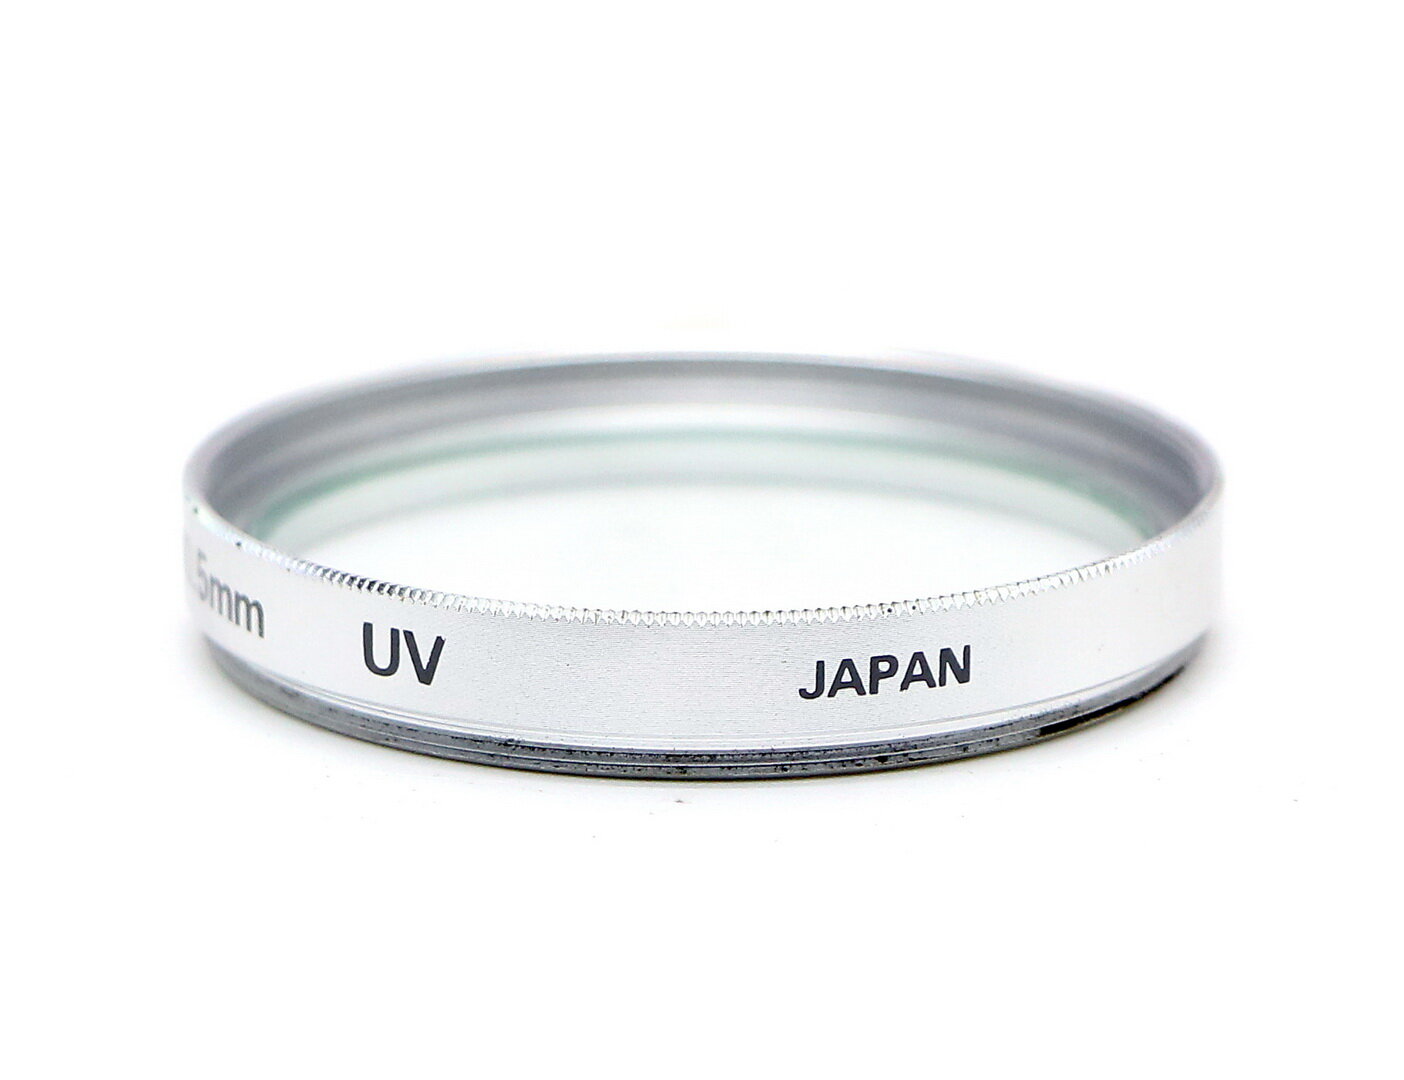 Светофильтр Konix UV 40.5mm